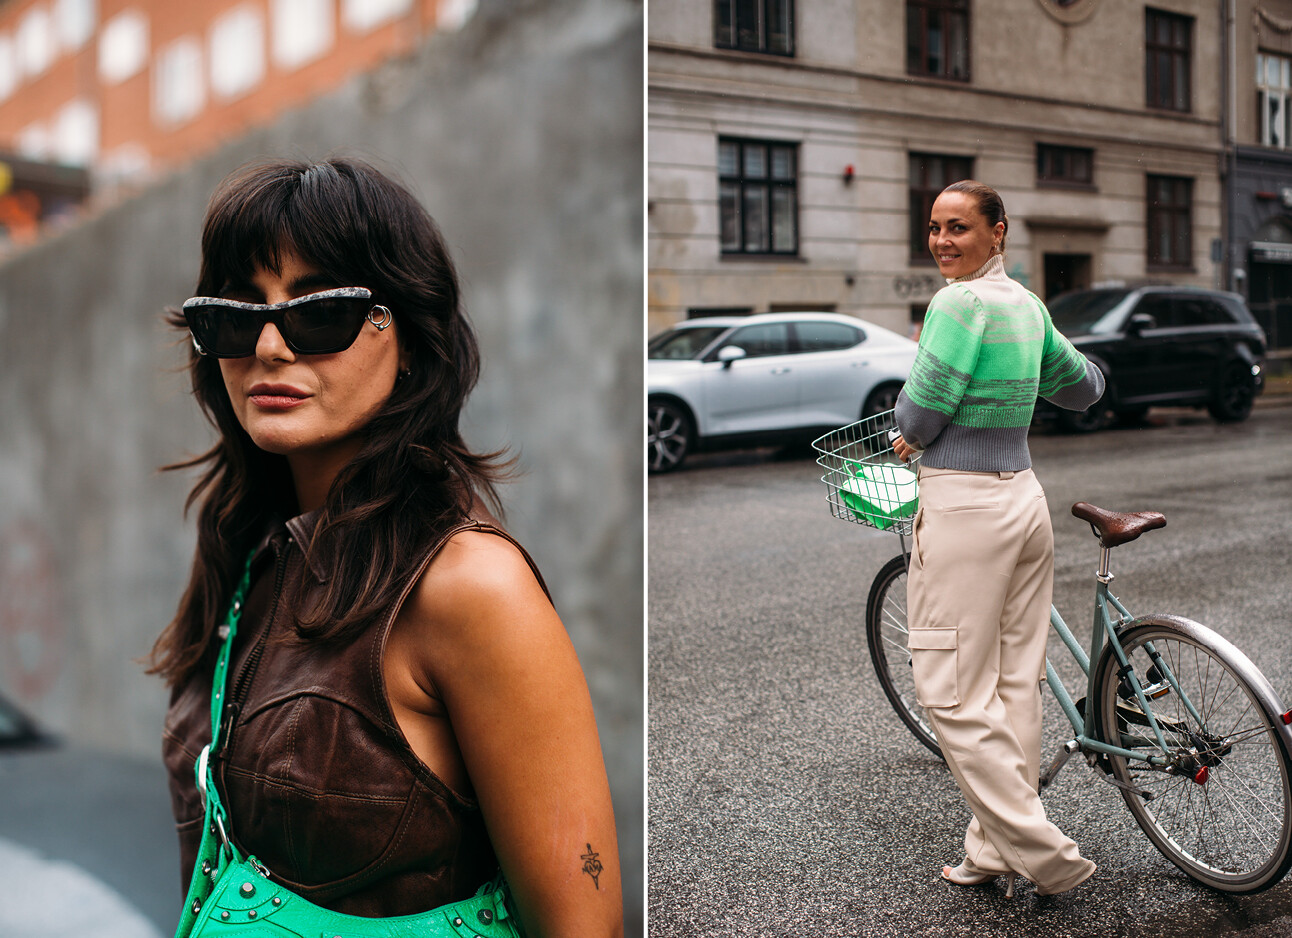 straatmodellen met groene kleding aan